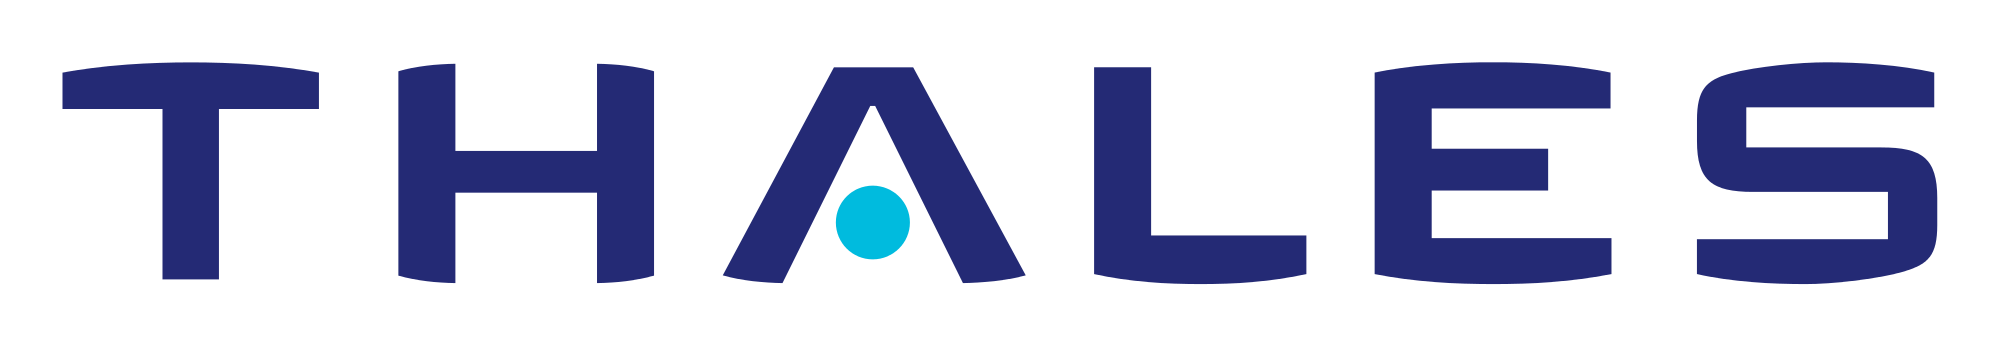 Thales Logo - Vormetric Data Security Platform